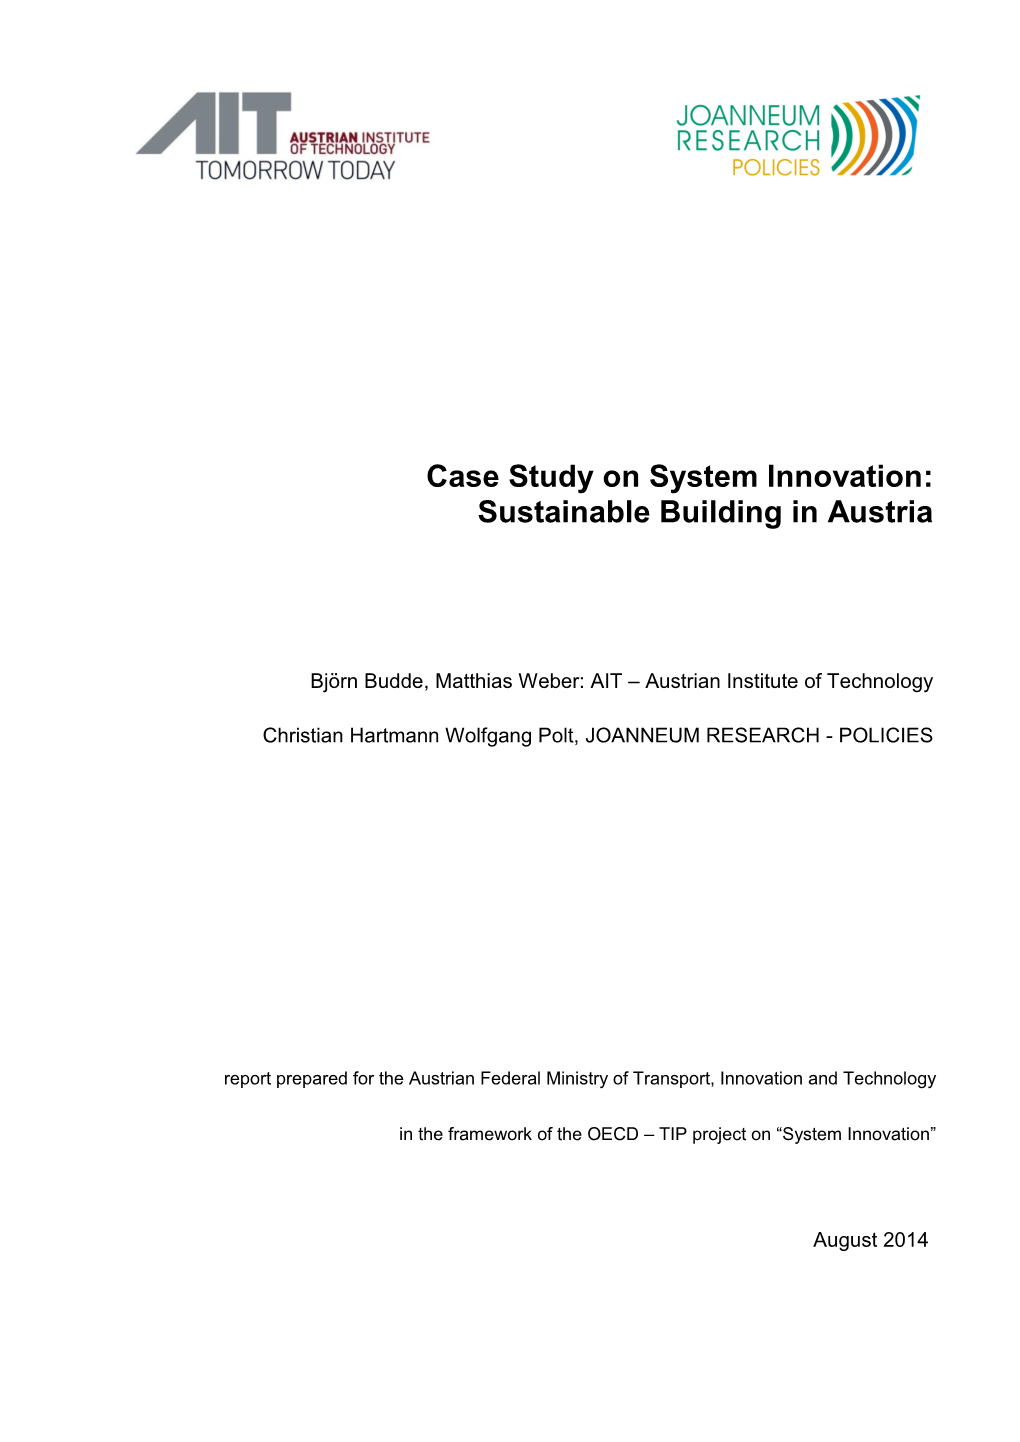 Sustainable Building in Austria